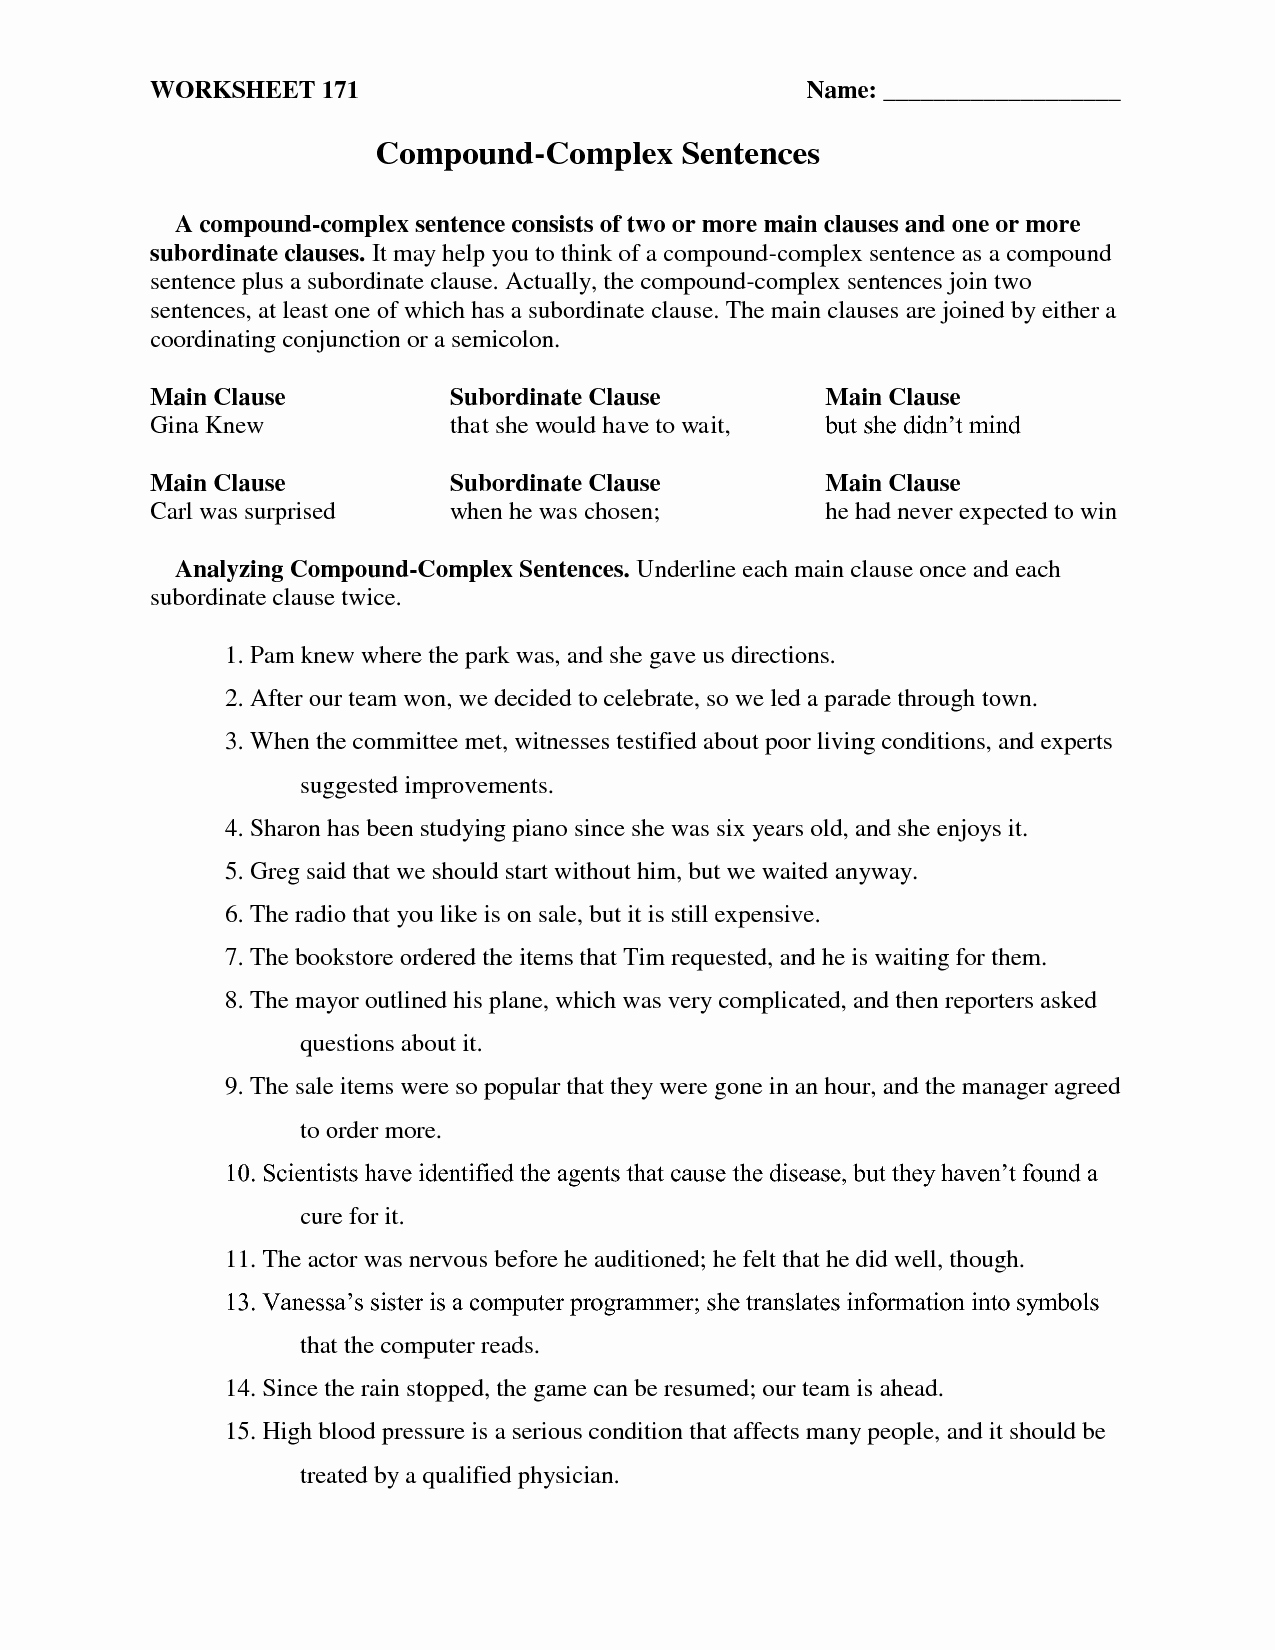 Compound and Complex Sentences Worksheet Awesome 13 Best Of Worksheets Pound Sentences Pound